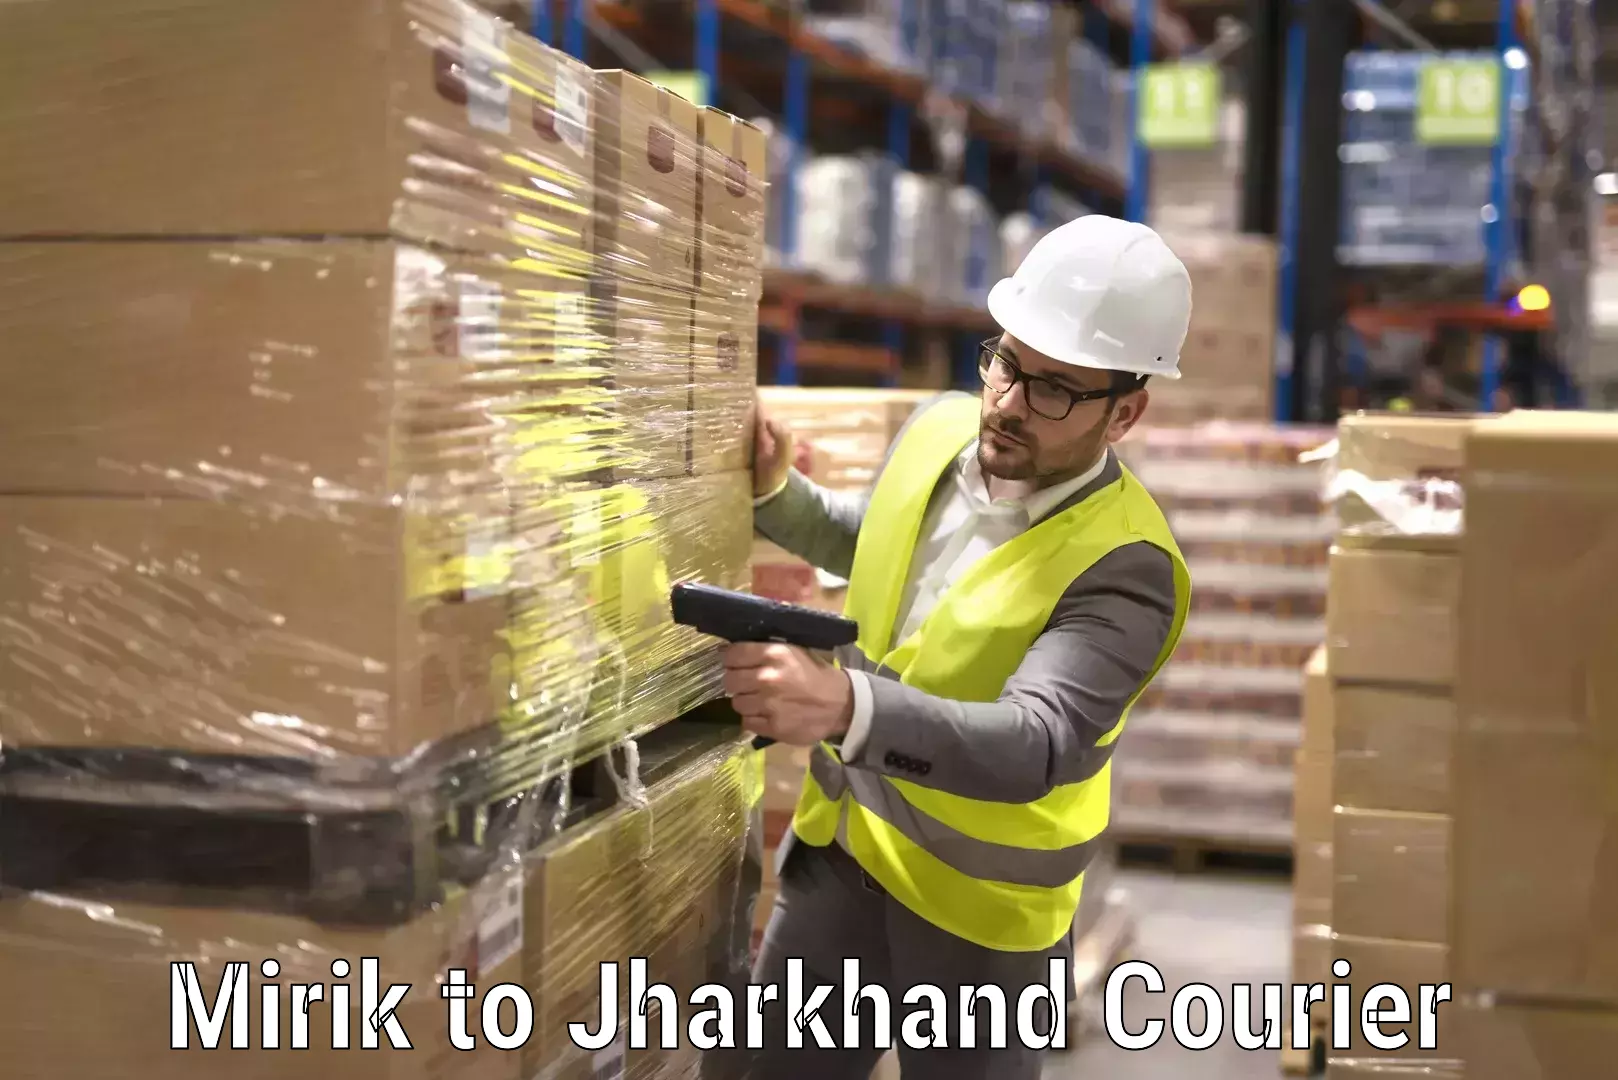 Professional moving company Mirik to Jharkhand